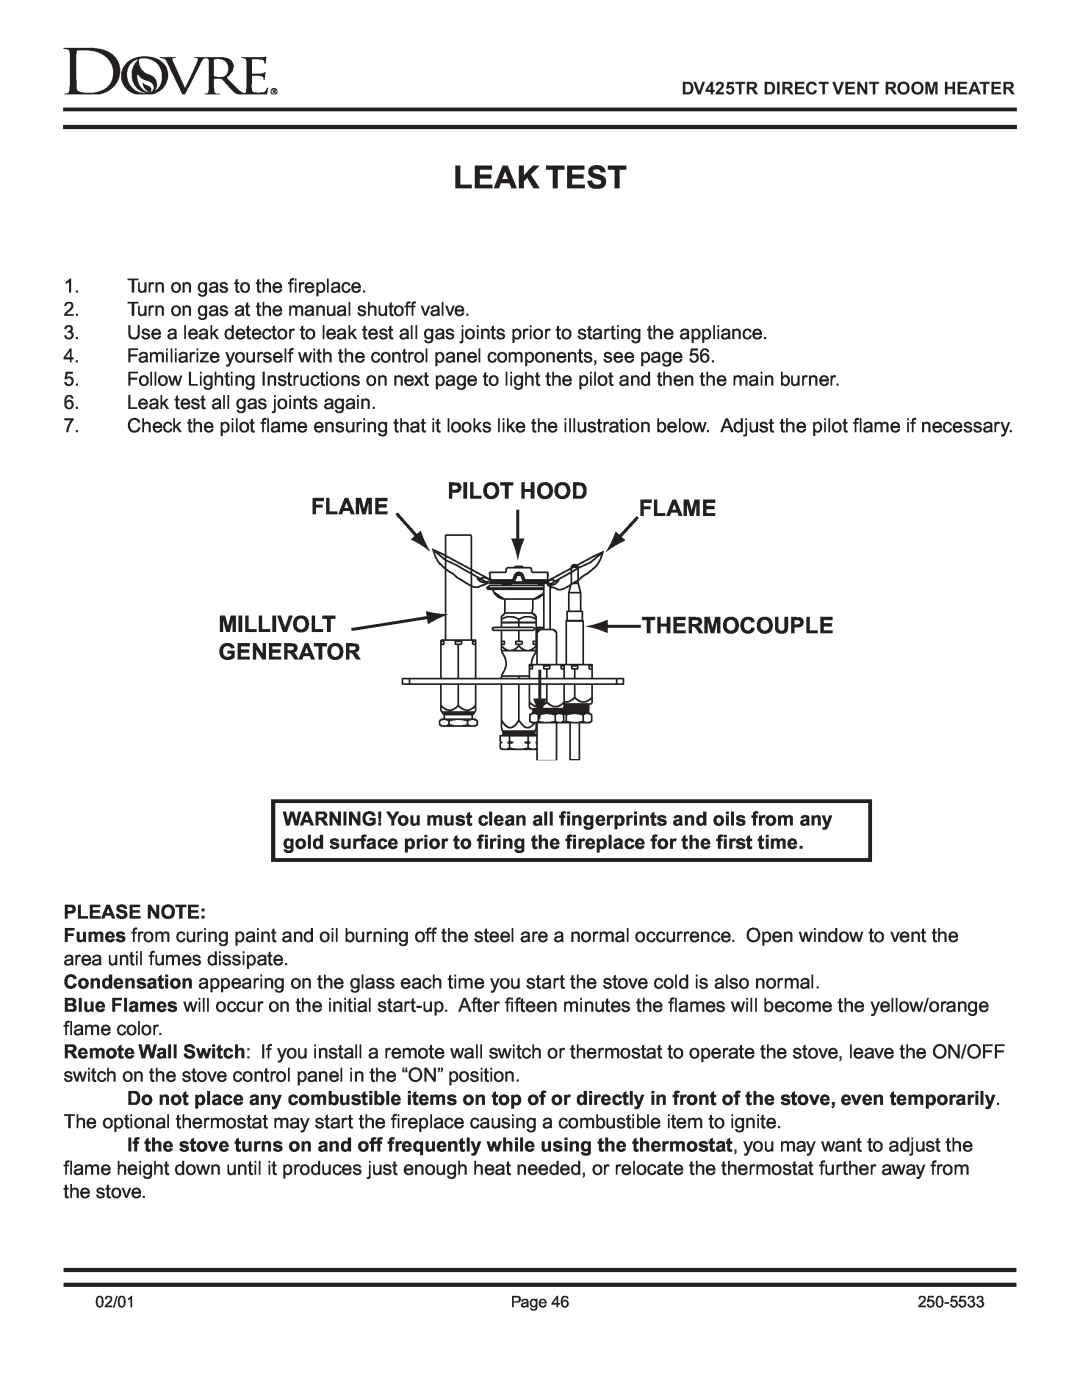 Sapphire Audio DV425TR owner manual Leak Test, Pilot Hood Flameflame, Millivolt Generator, Thermocouple, Please Note 